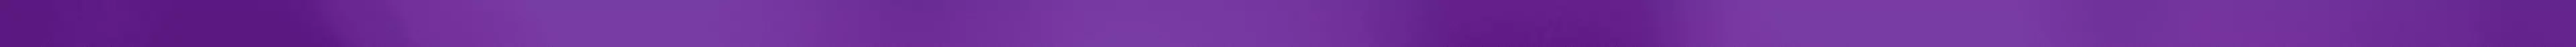 img-purple-divider